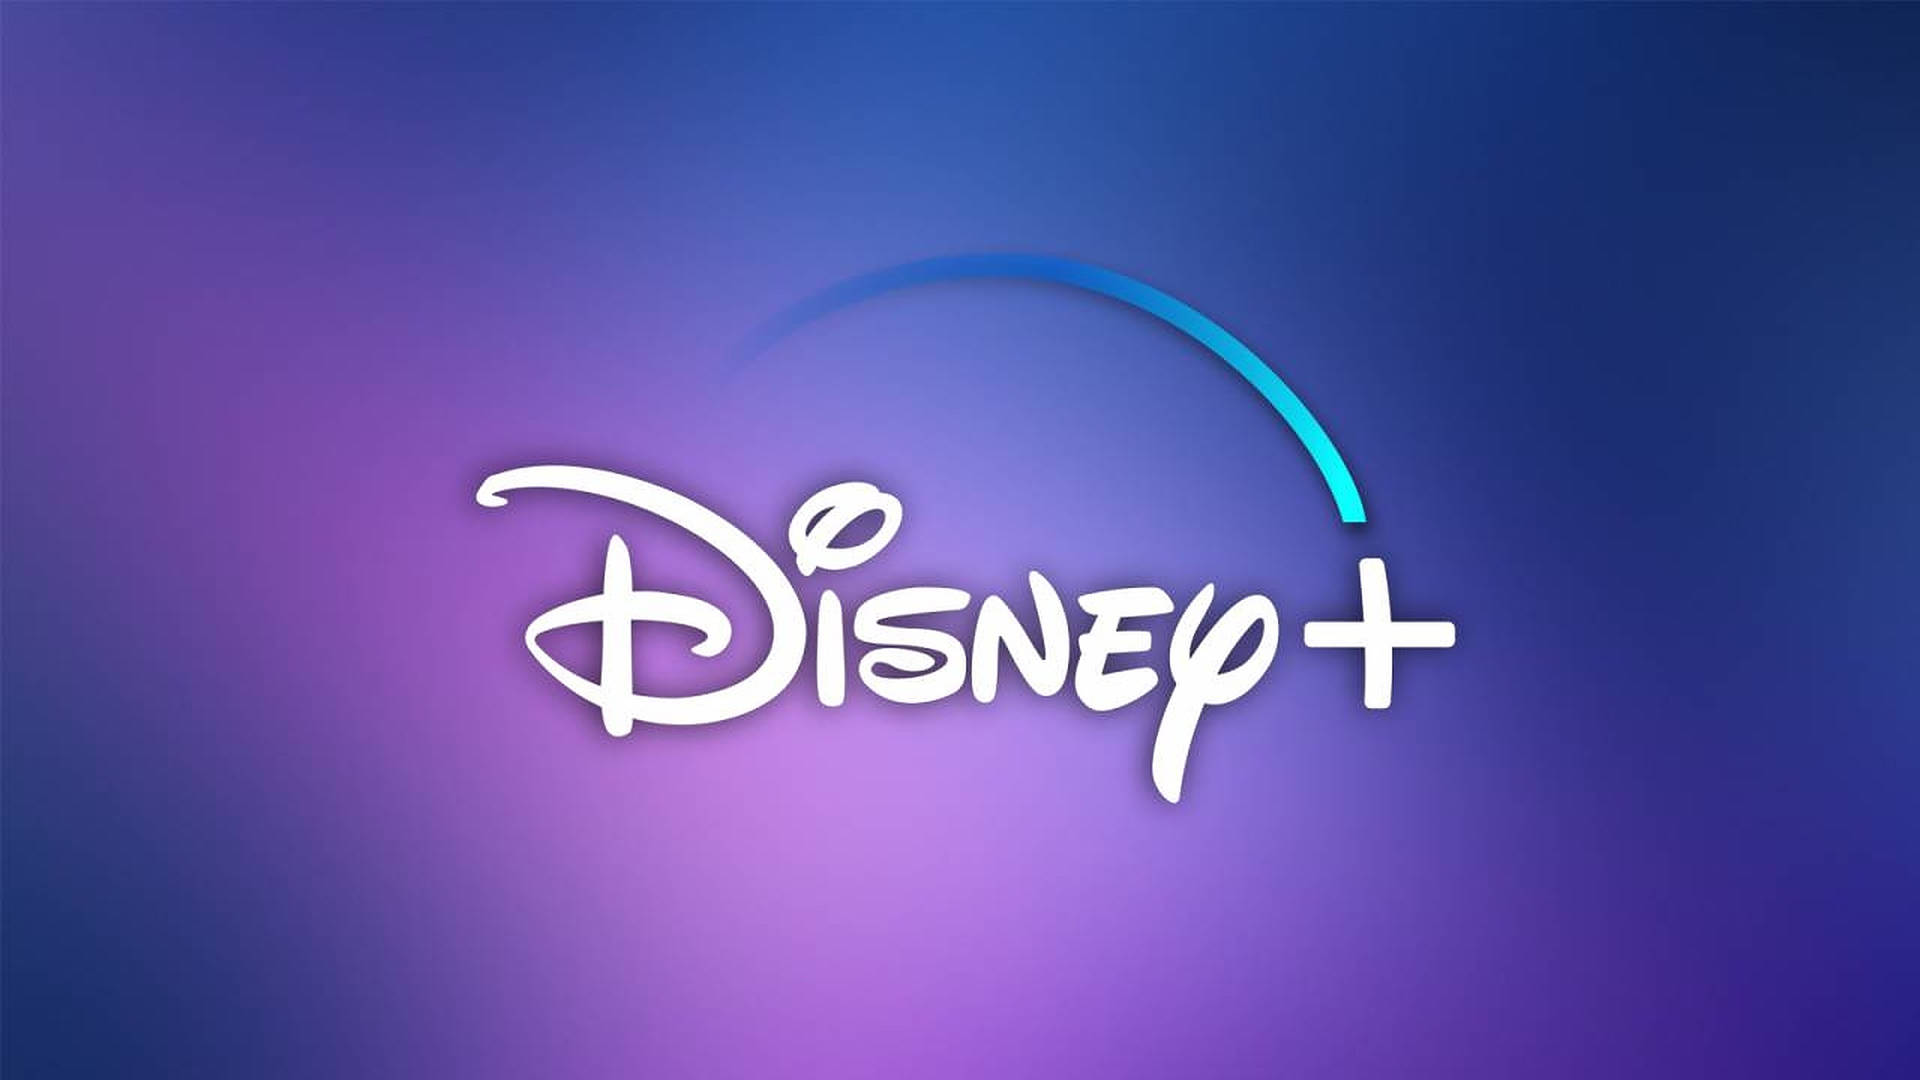 Disney Logo Plus Purple Gradient Background